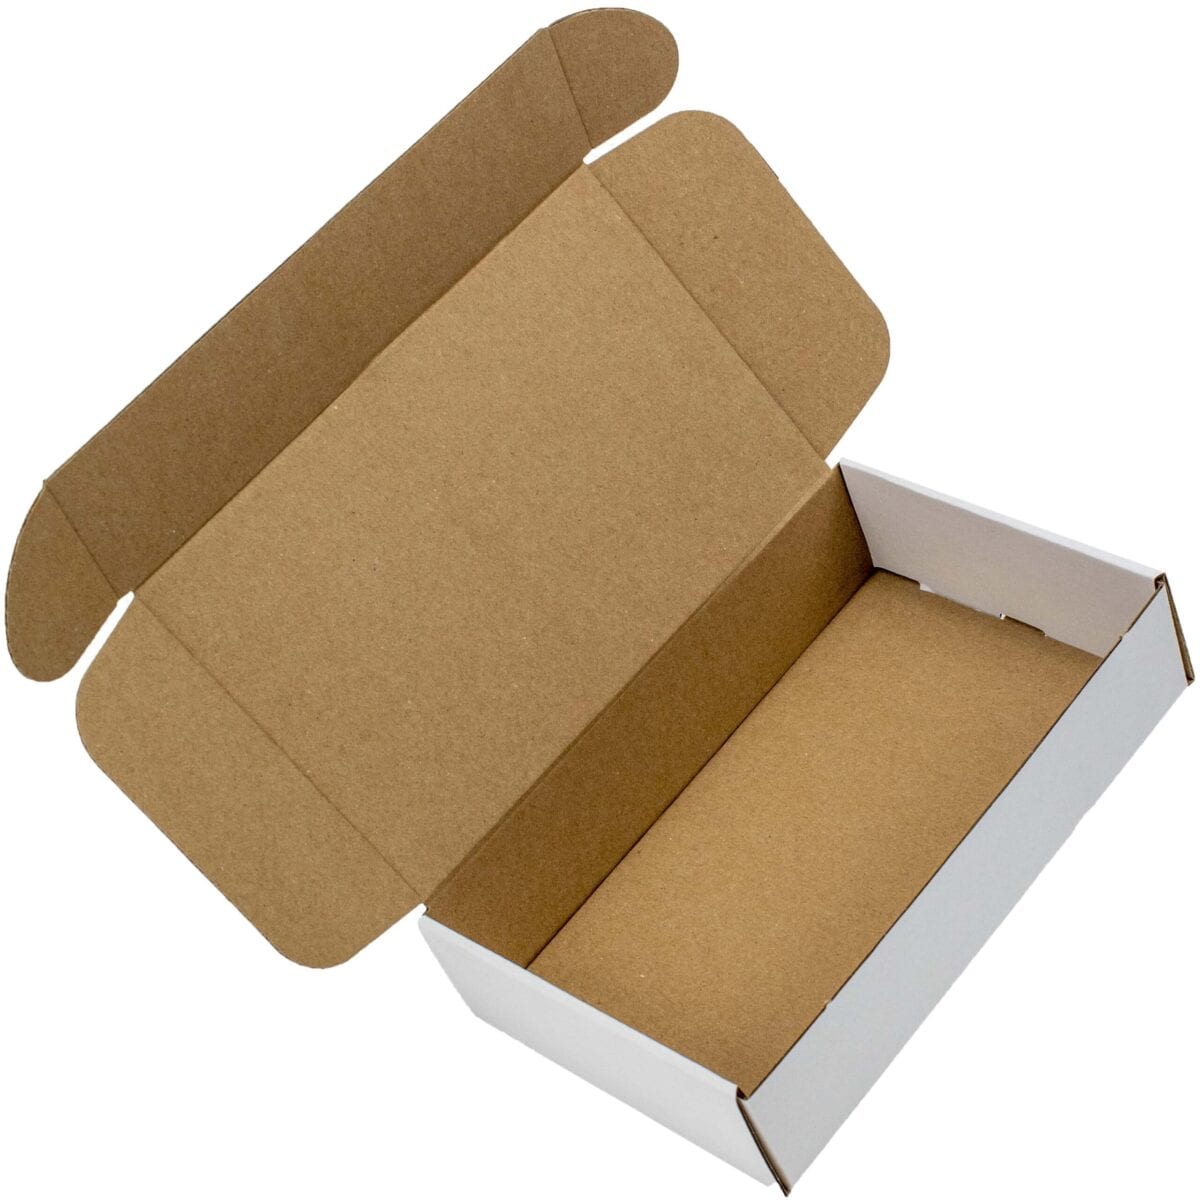 Buy 200x125x50mm White Postal & Mailing Box | Packaging Supplies